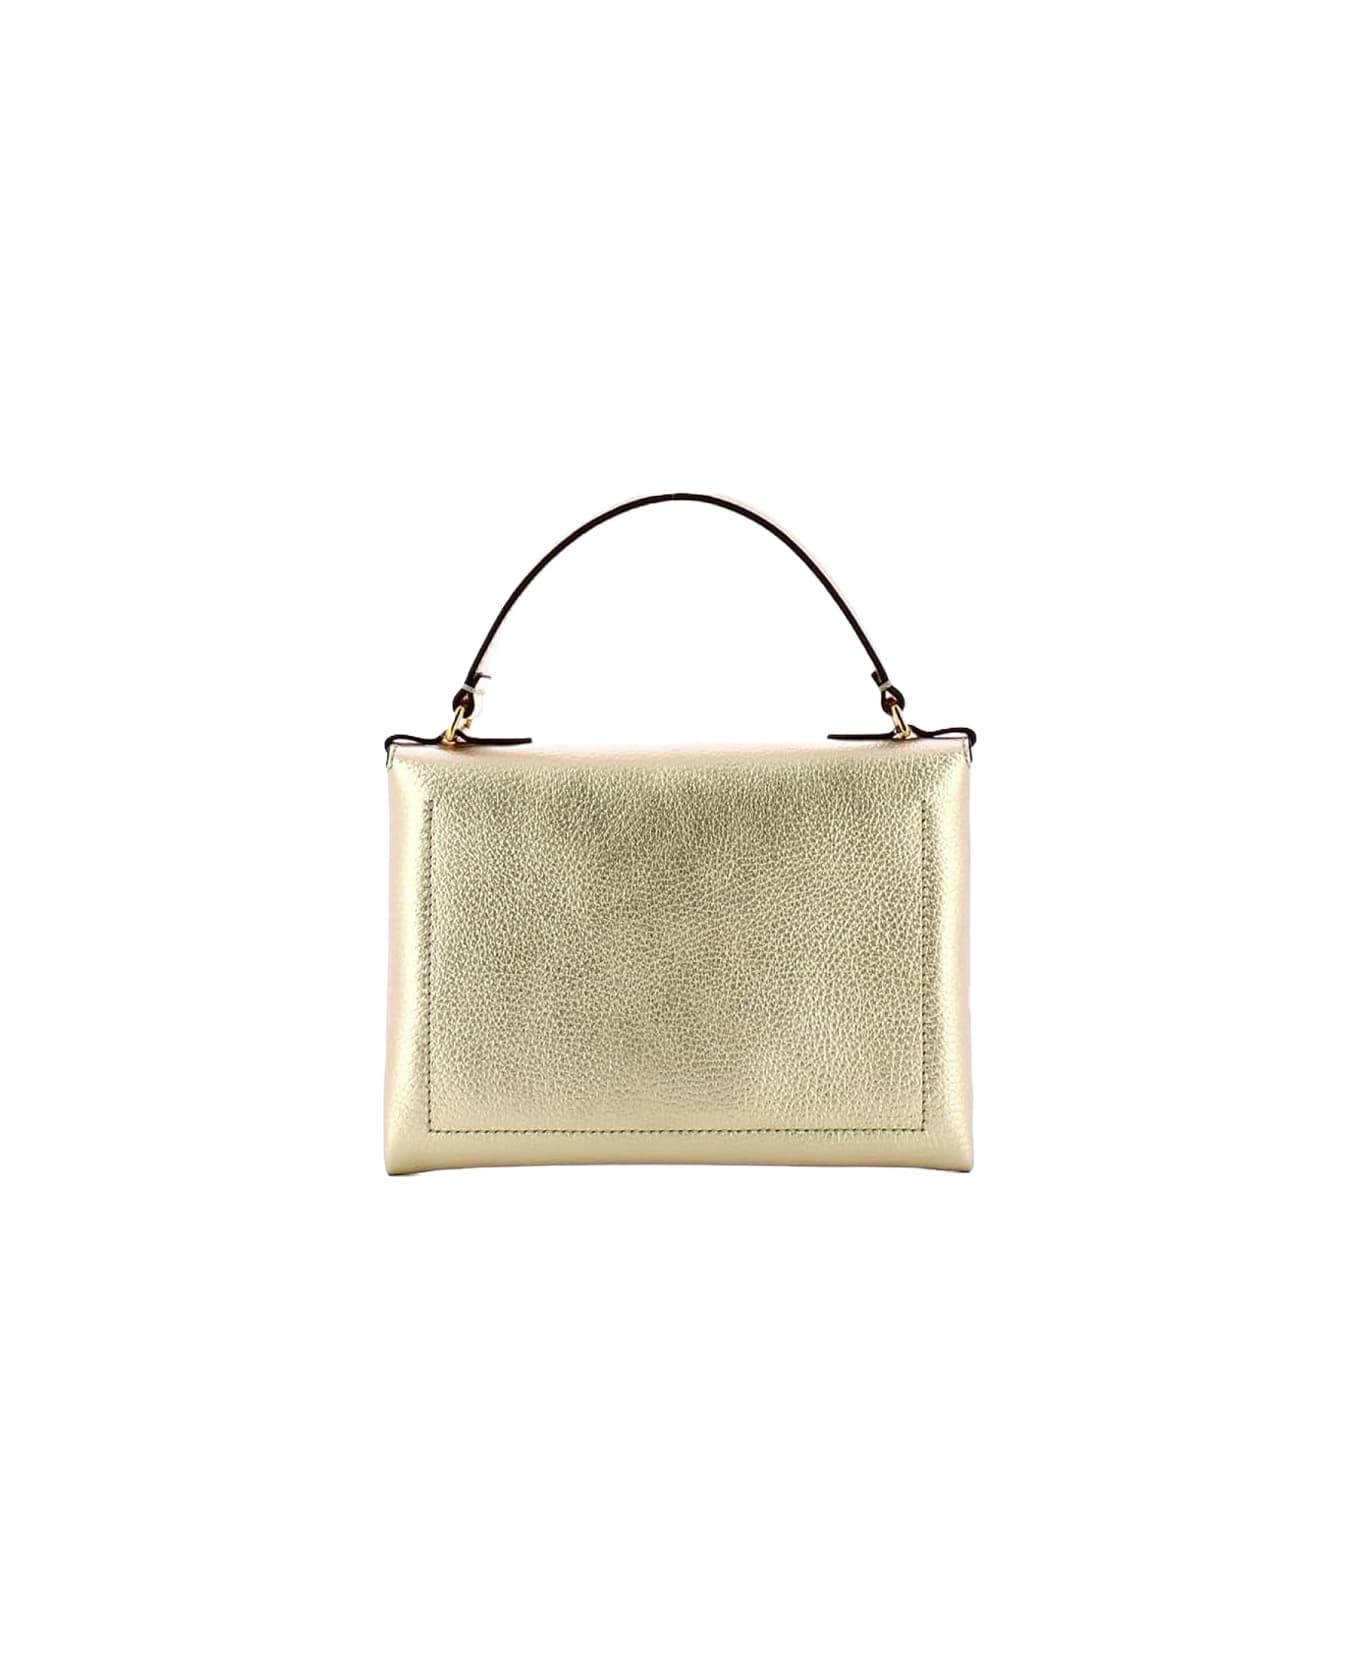 Coccinelle Arlettis Mini Handbag - Pale gold トートバッグ